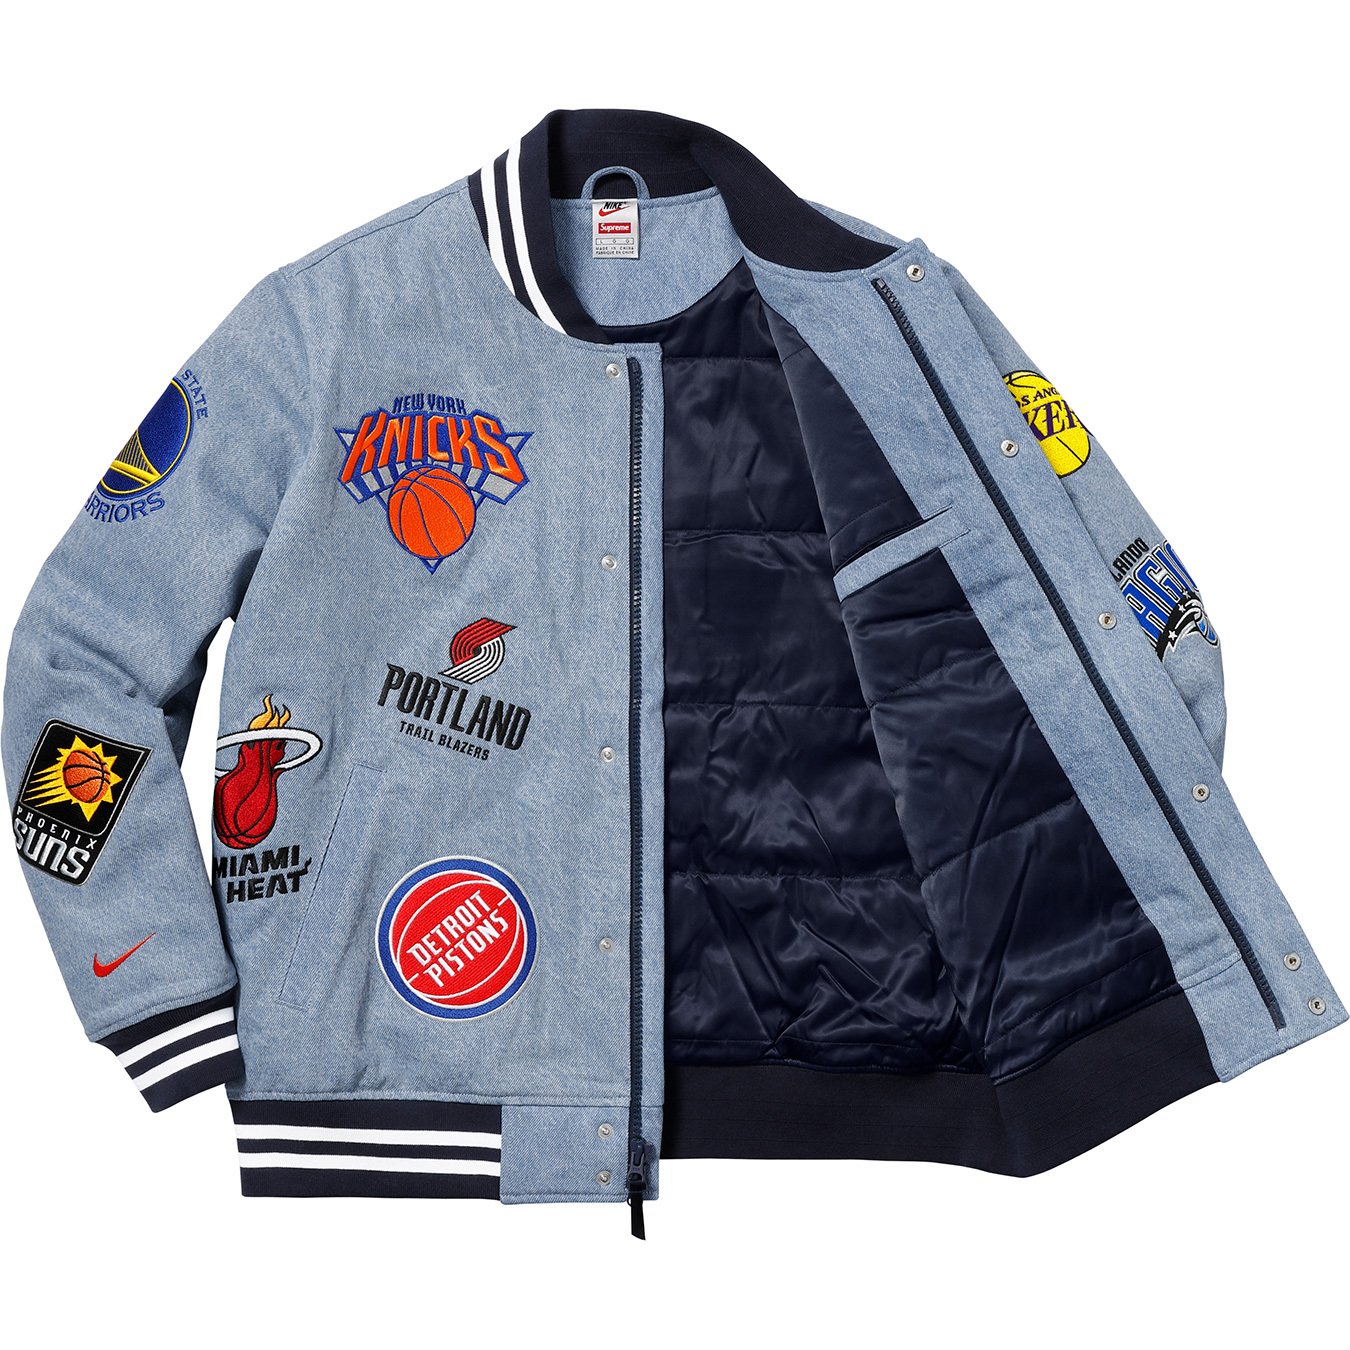 Supreme/Nike/NBA Teams Warm-Up Jacket